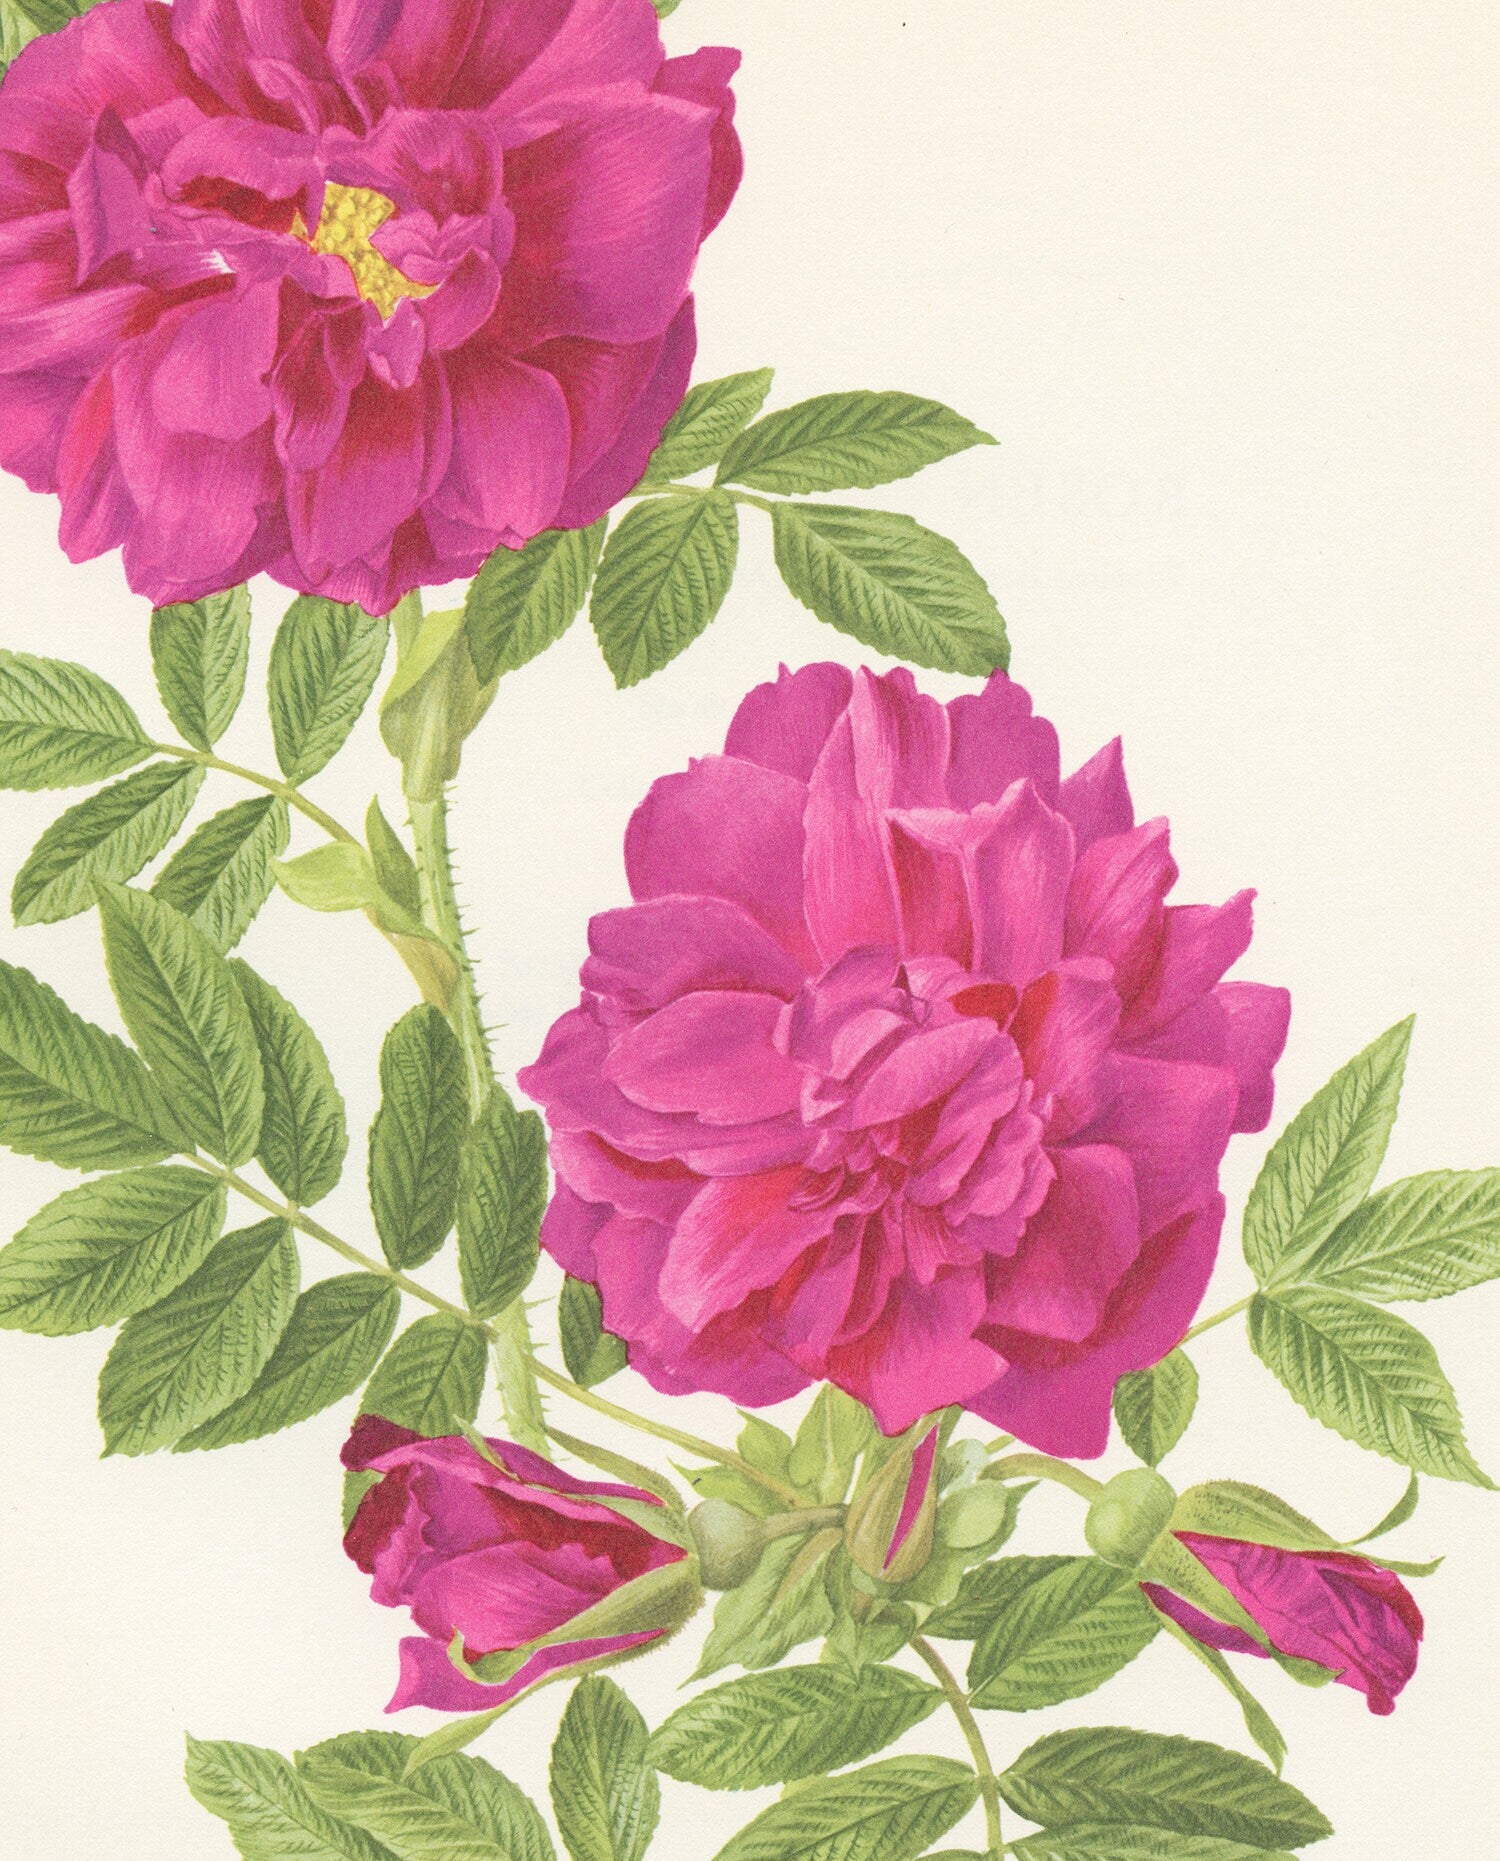 1962 Roseraie de l'Hay Purple Rose botanical print. Vintage pink old rose poster. Gardener gift. Flowers botanical art. French Country decor